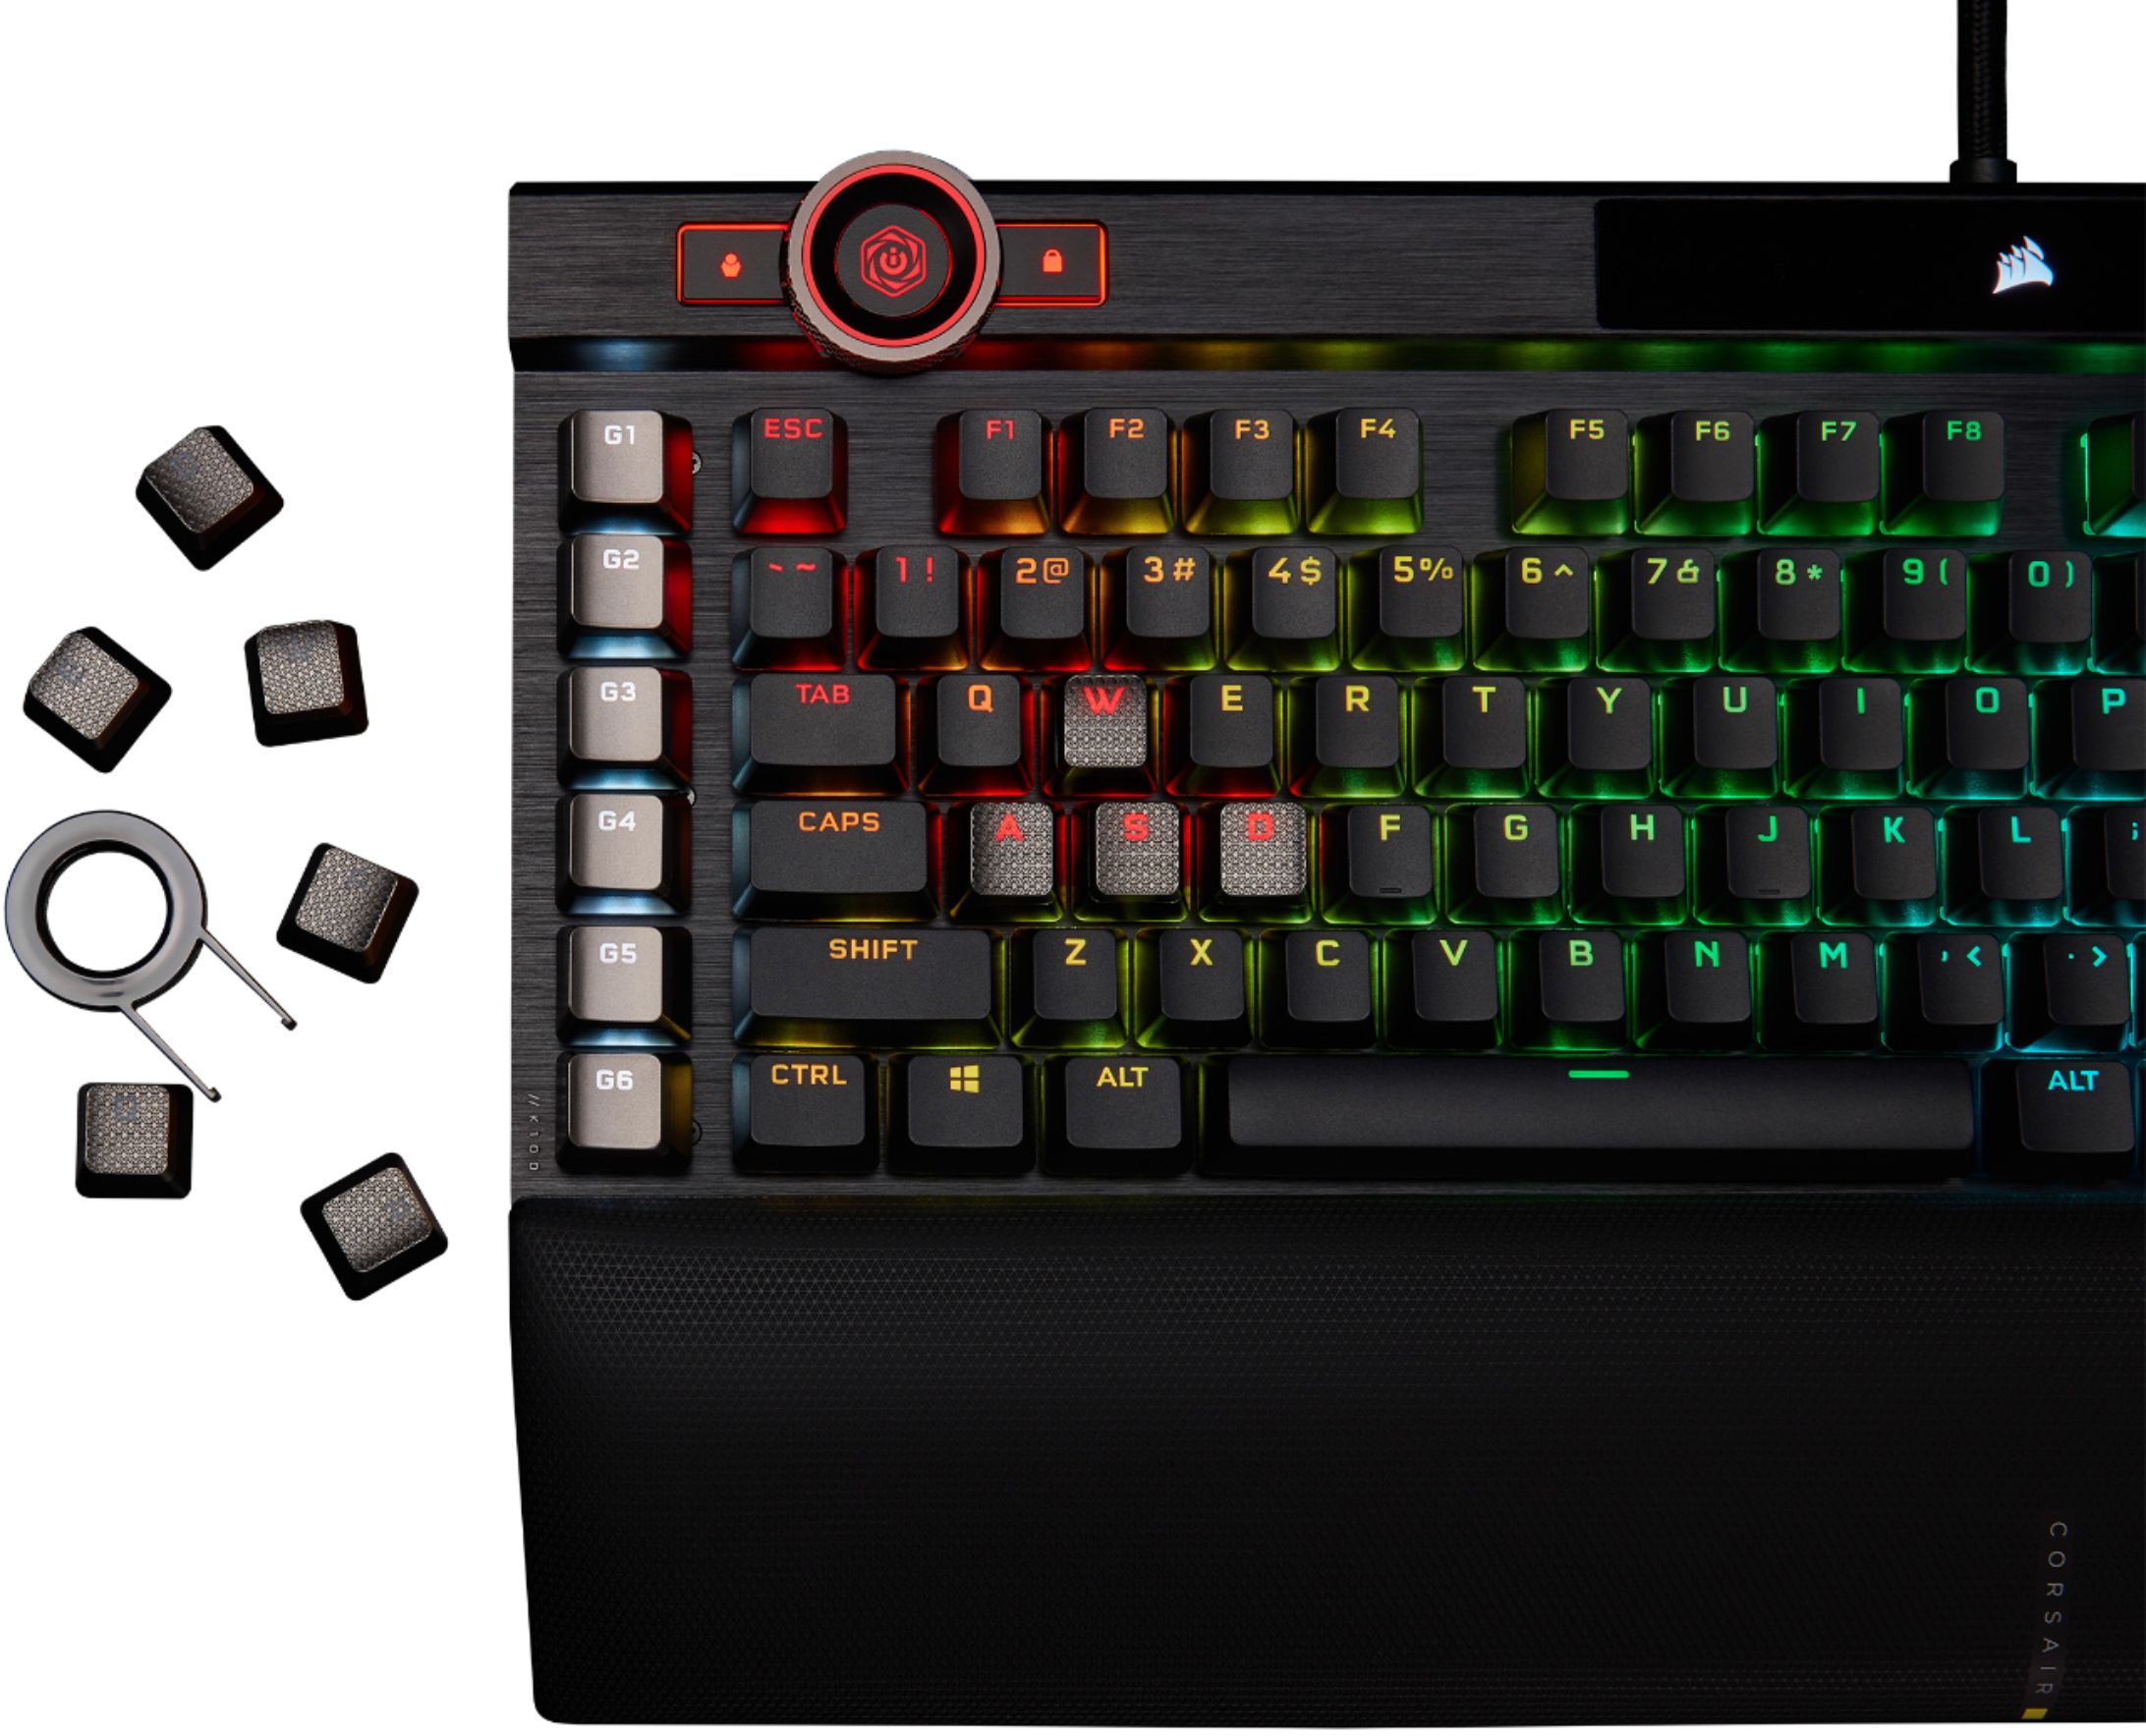 CORSAIR K100 RGB gaming keyboard with programmable control wheel